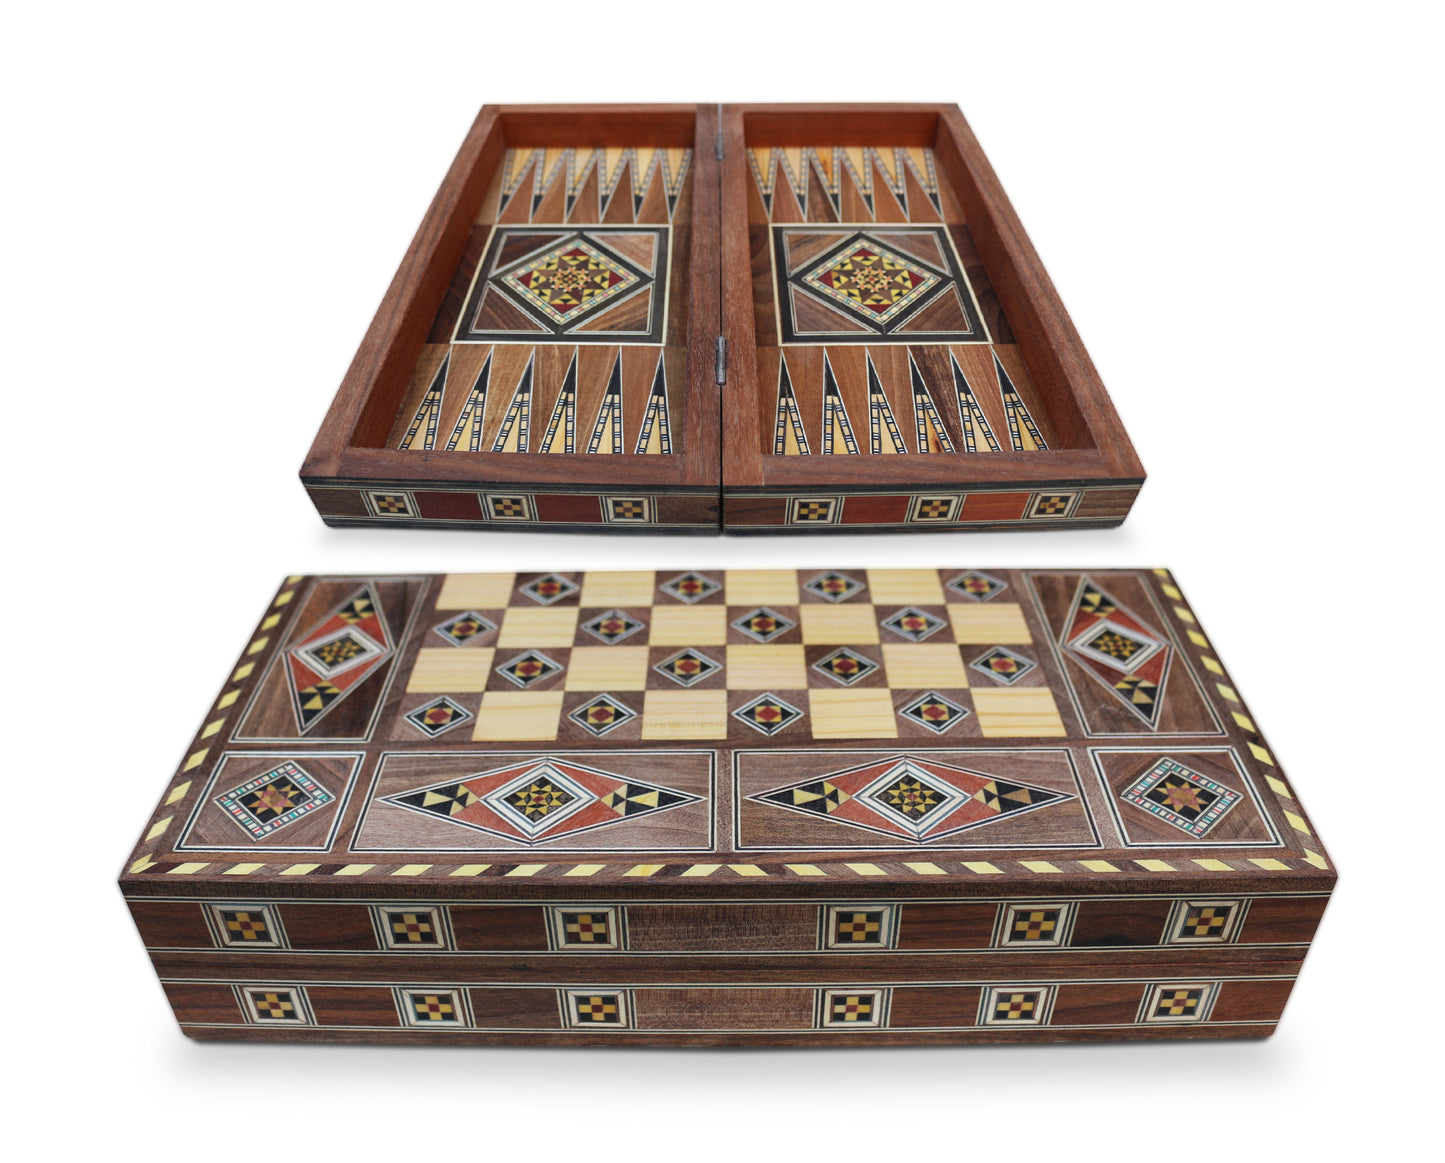 Holz Backgammon/Schach Brett inkl. Holz Steine BC310